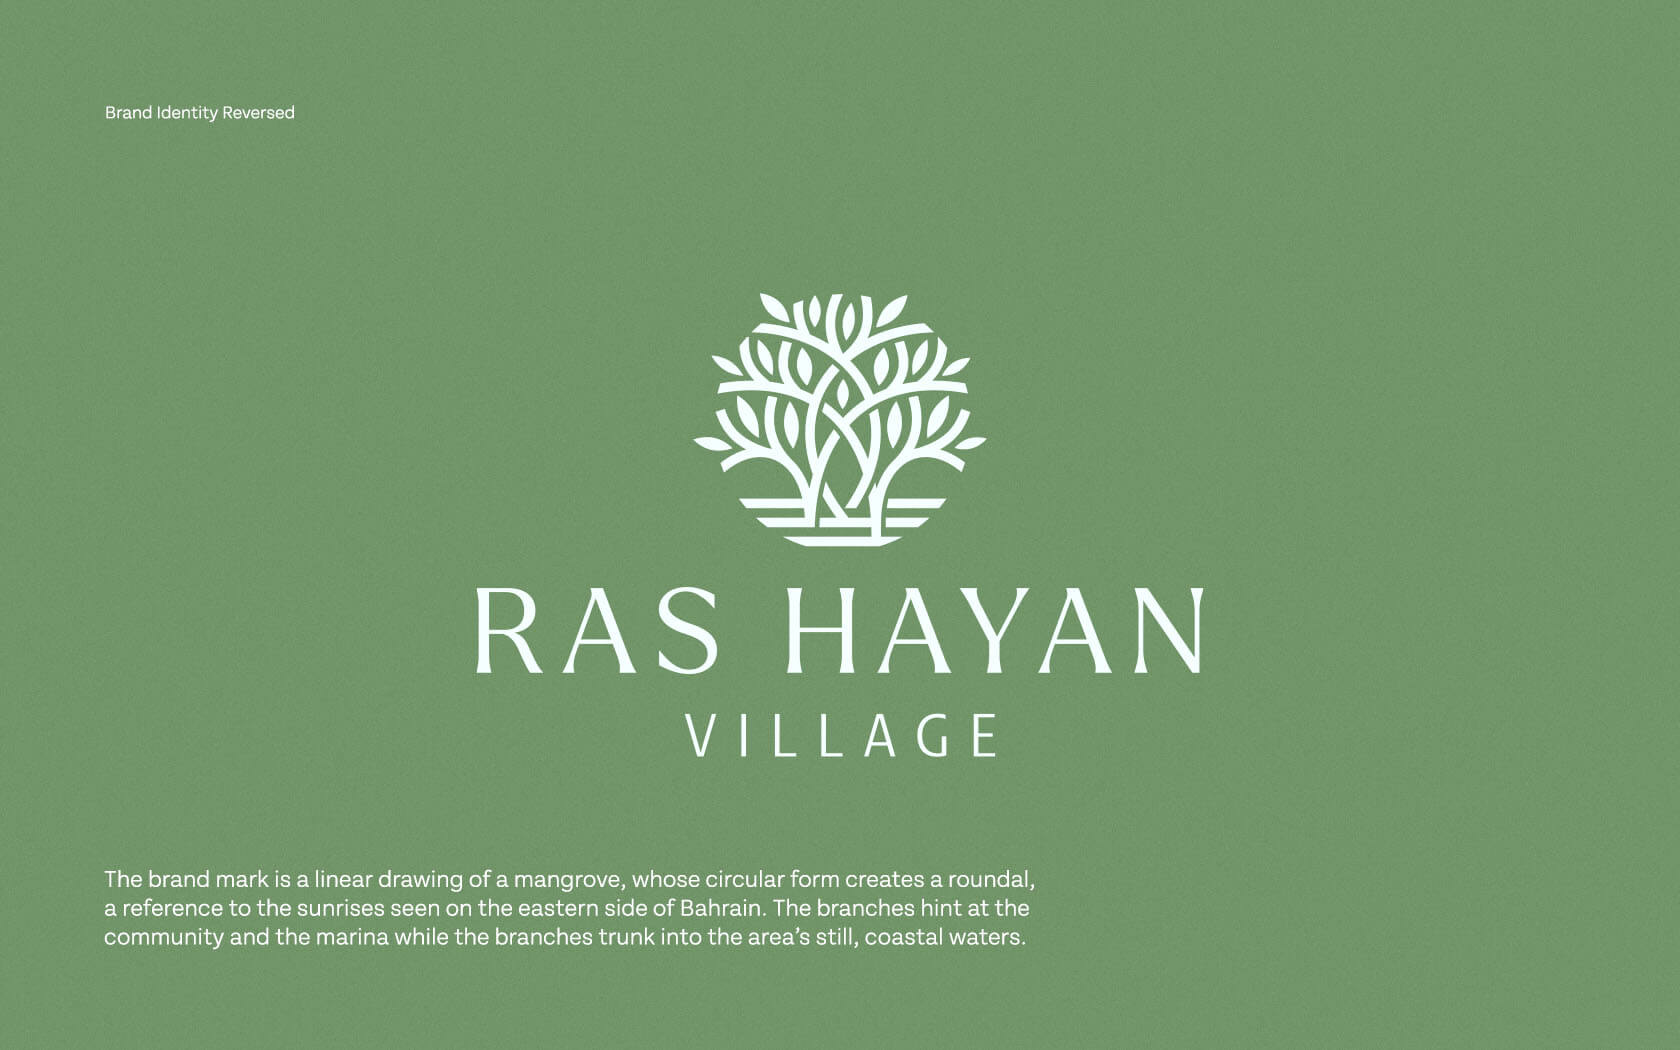 Ras Hayan. Brand logo in reverse